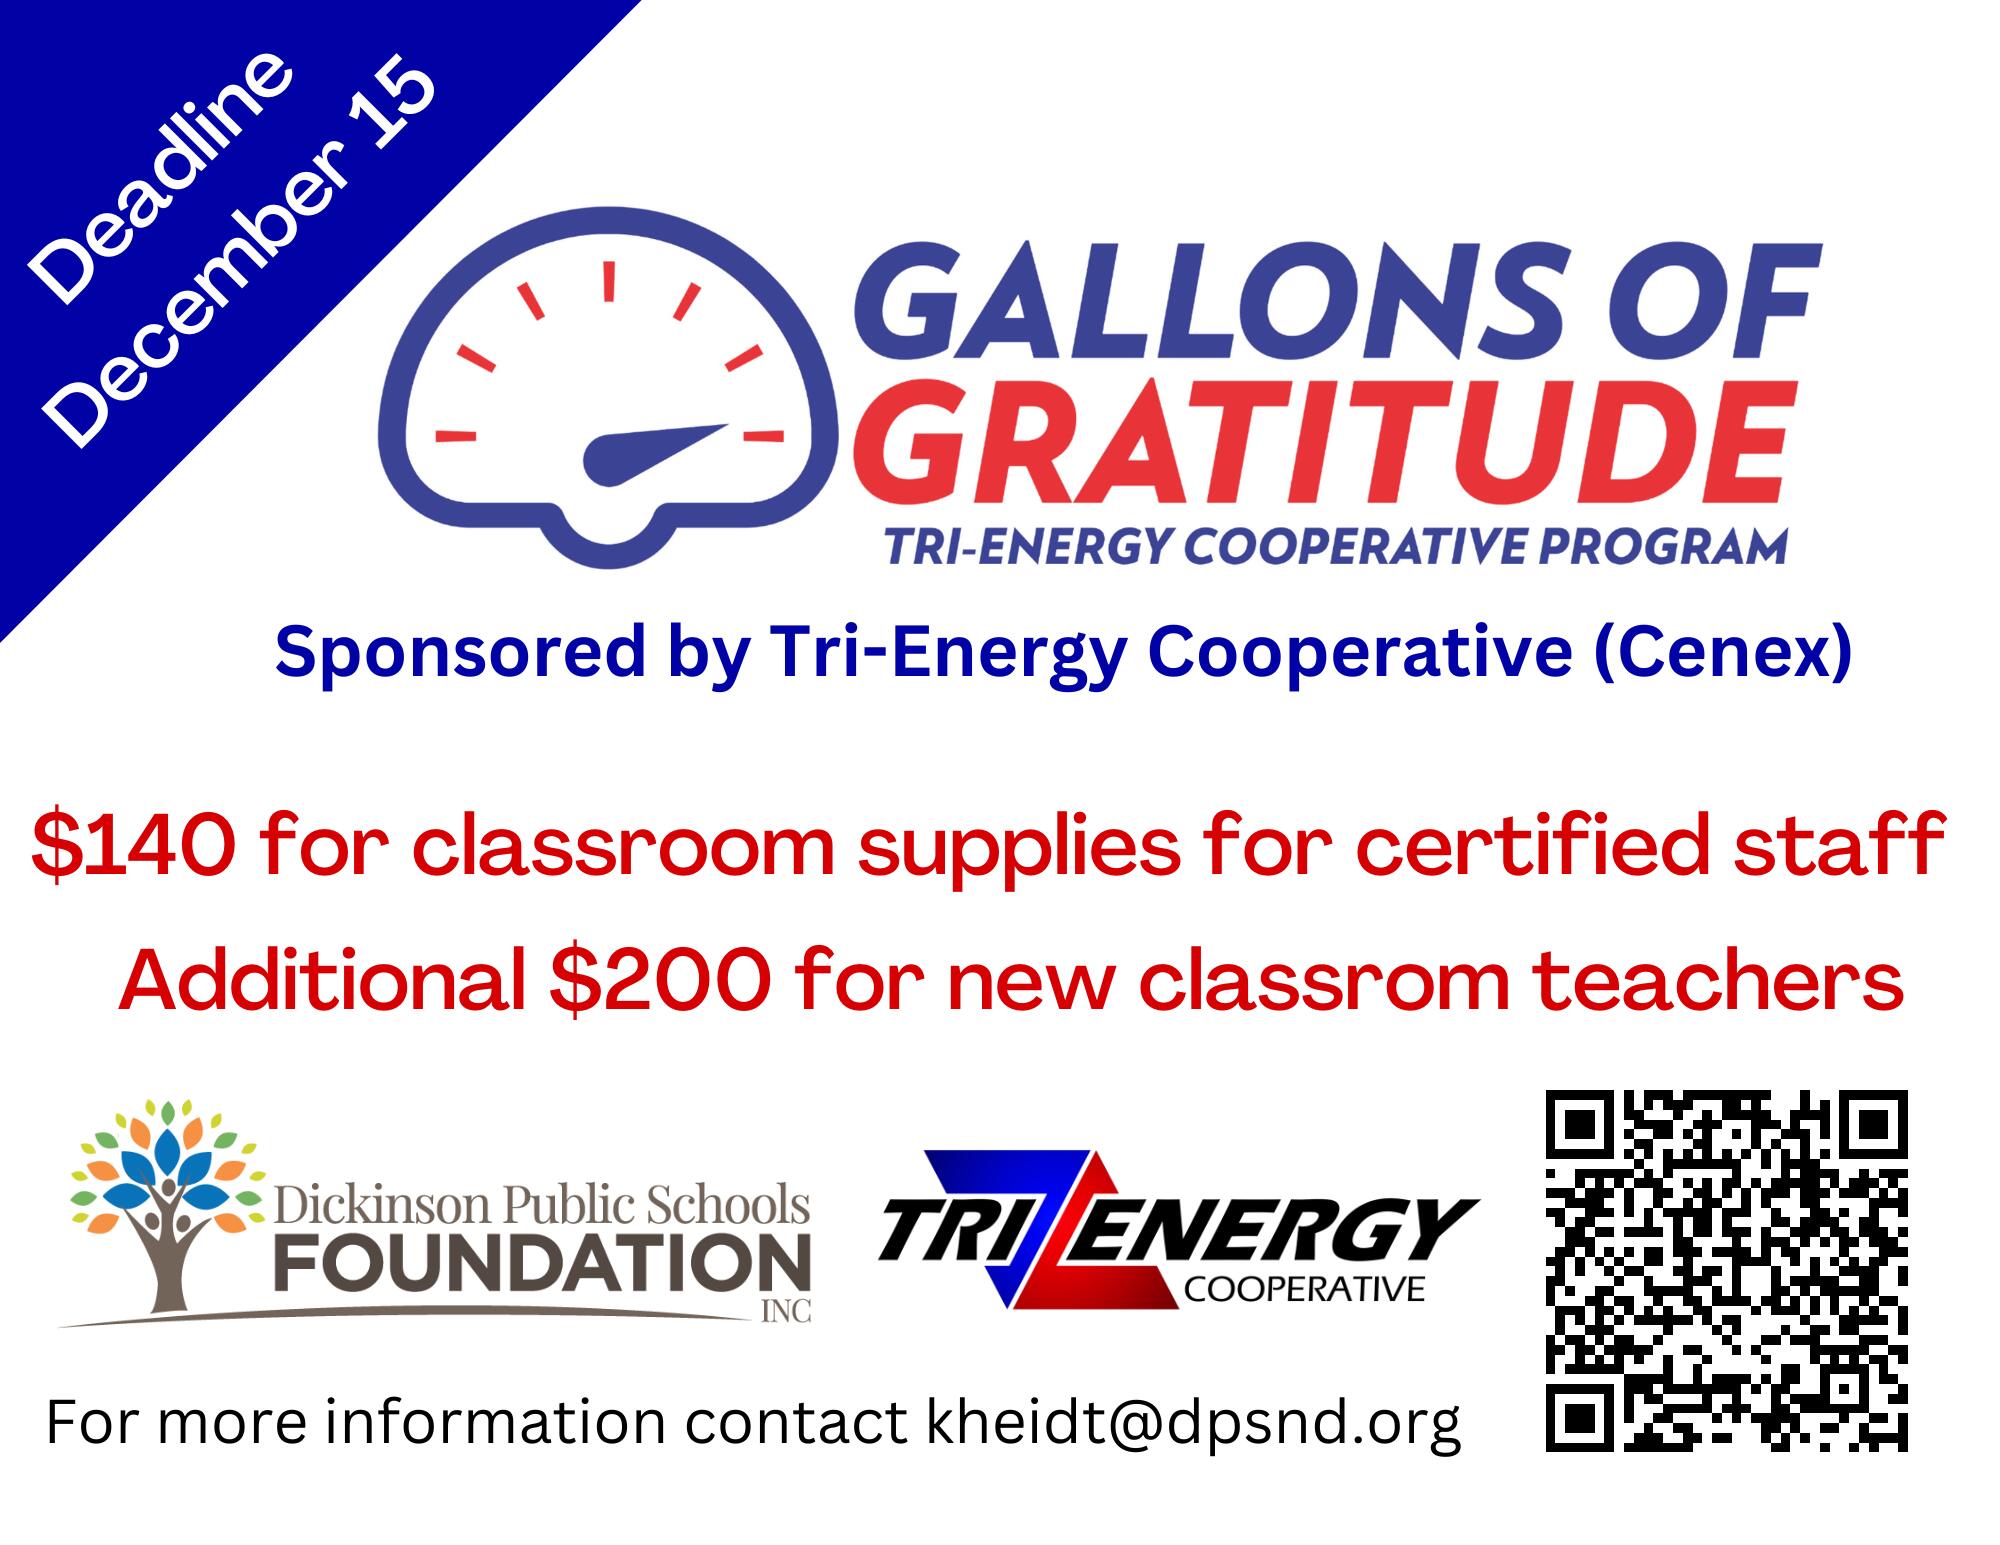 Gallons of Gratitude Tri-Energy Cooperative Program information flyer